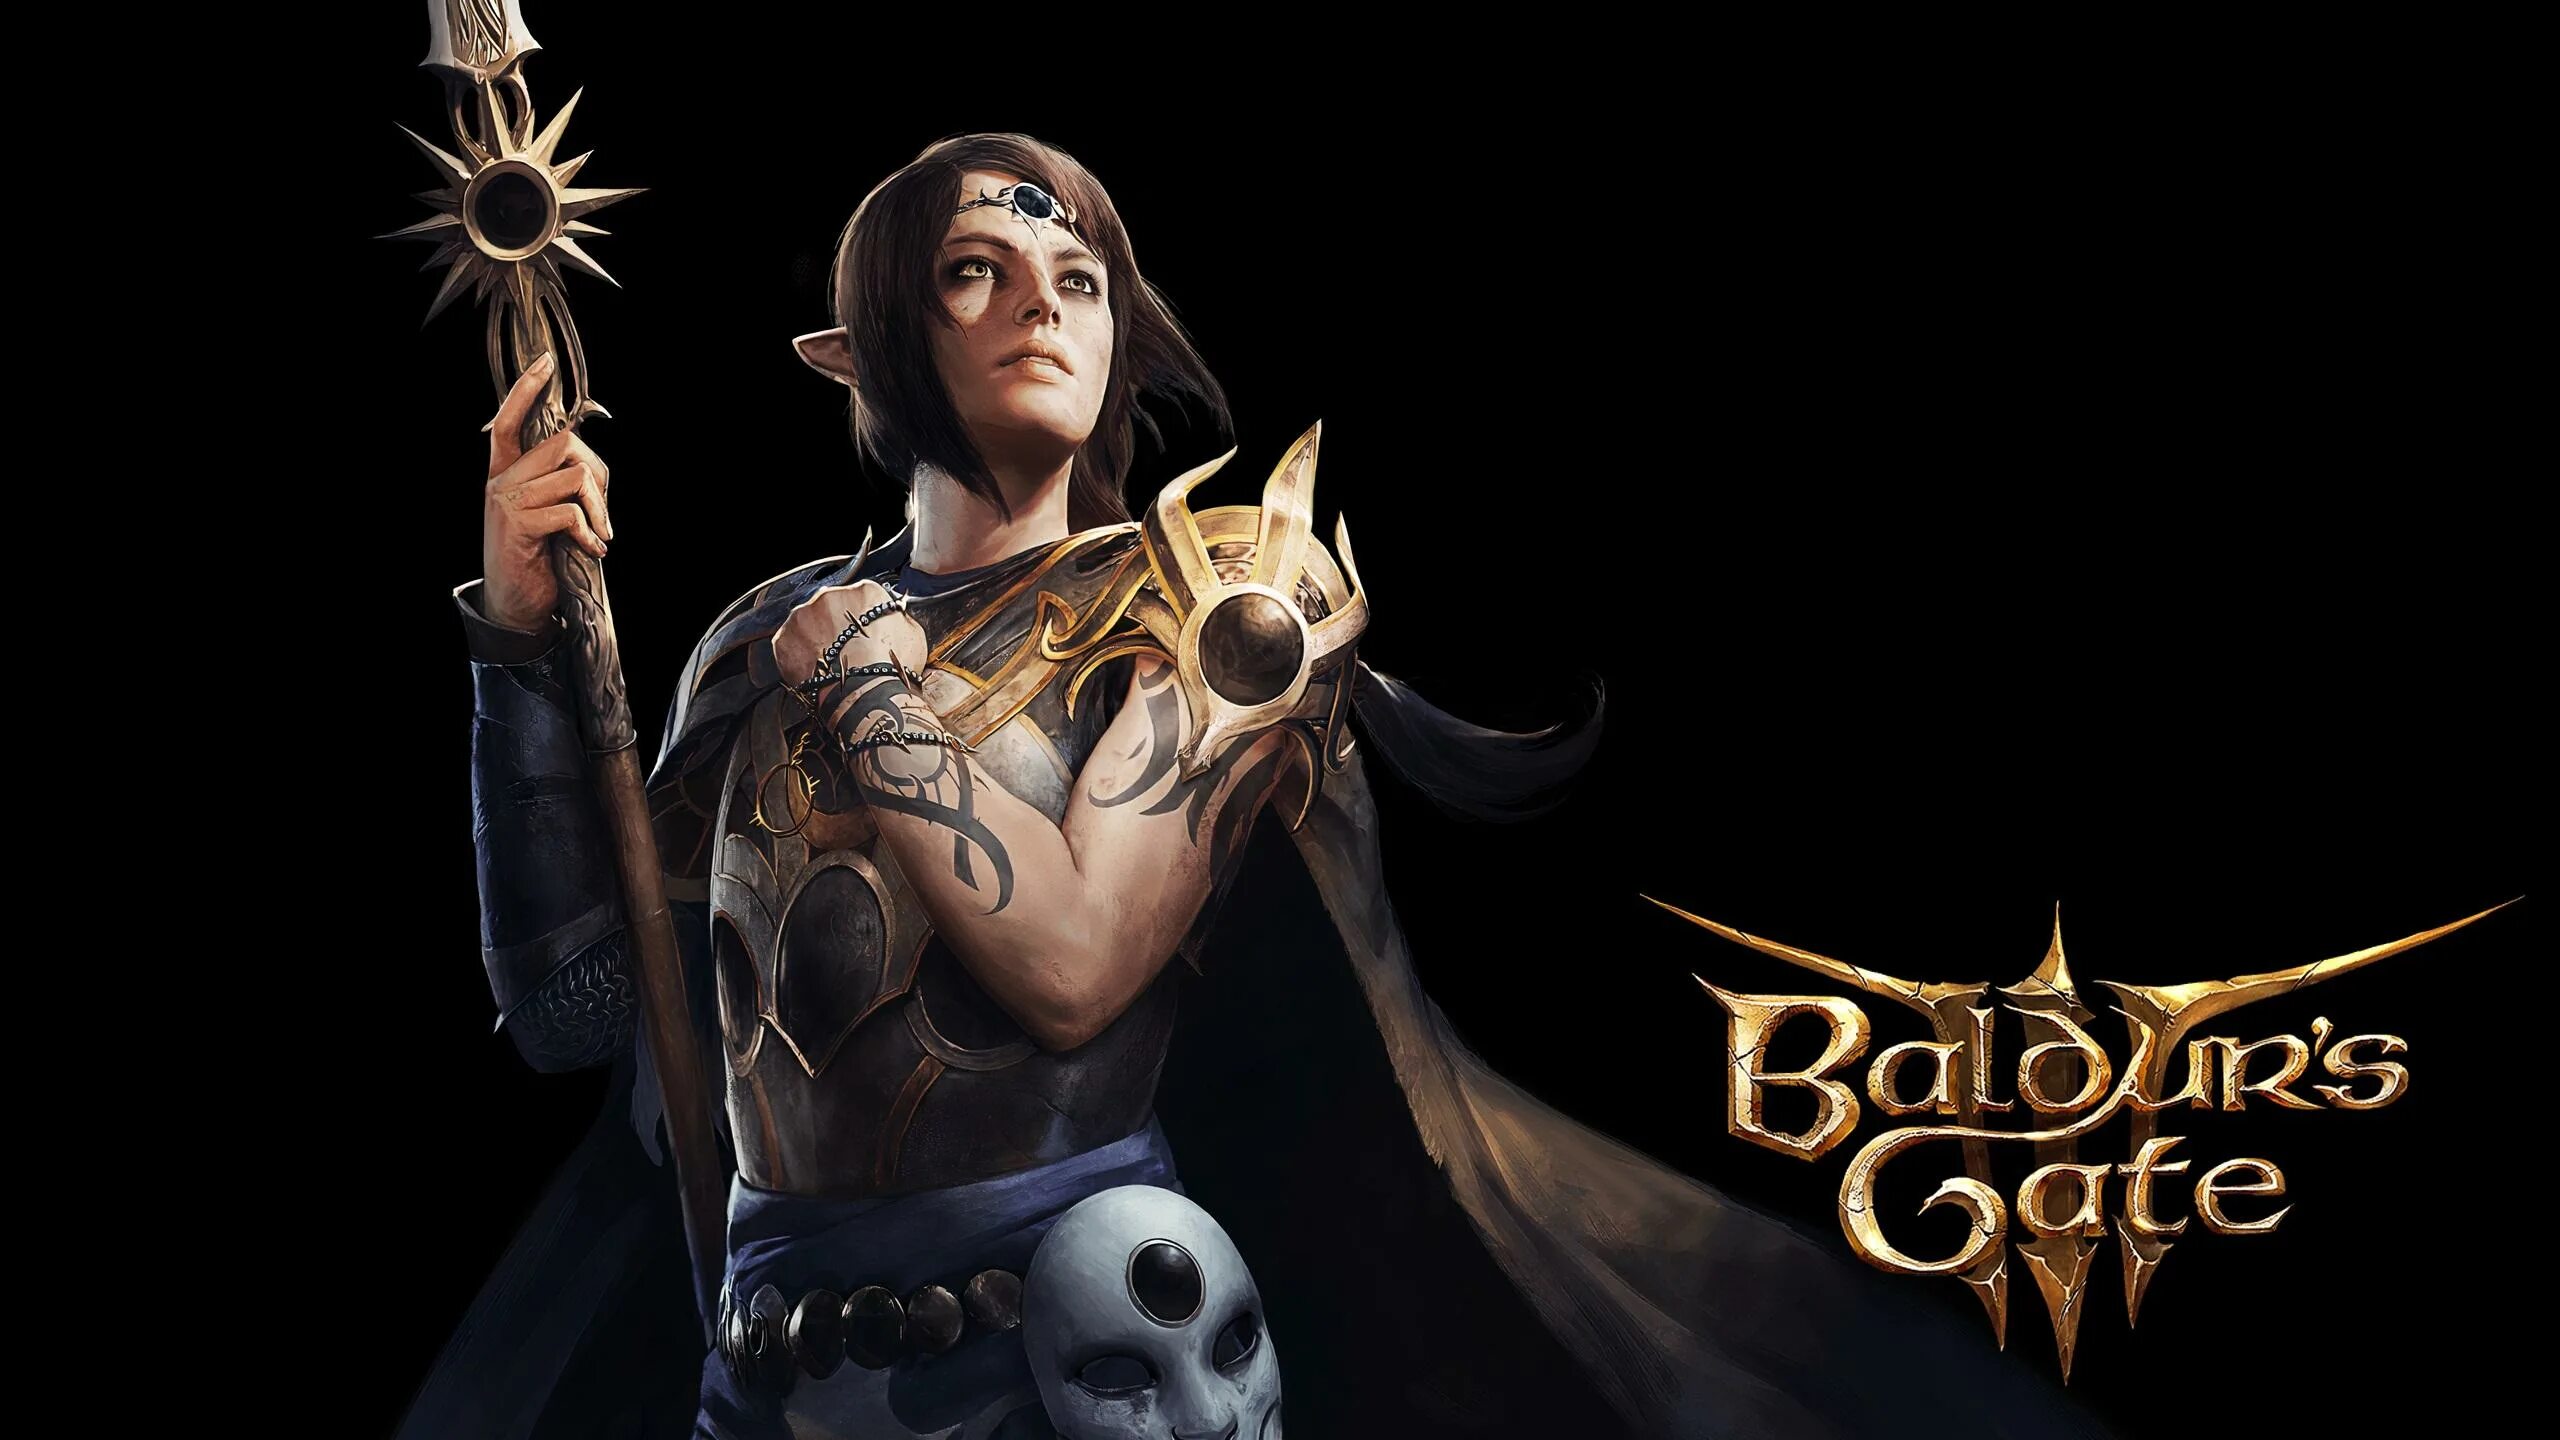 Baldur's Gate 3. Baldur's Gate 3 Shadowheart. Baldur's Gate III Астарион. Шедоухарт Baldur's Gate 3 арт. Родители шедоухарт baldur s